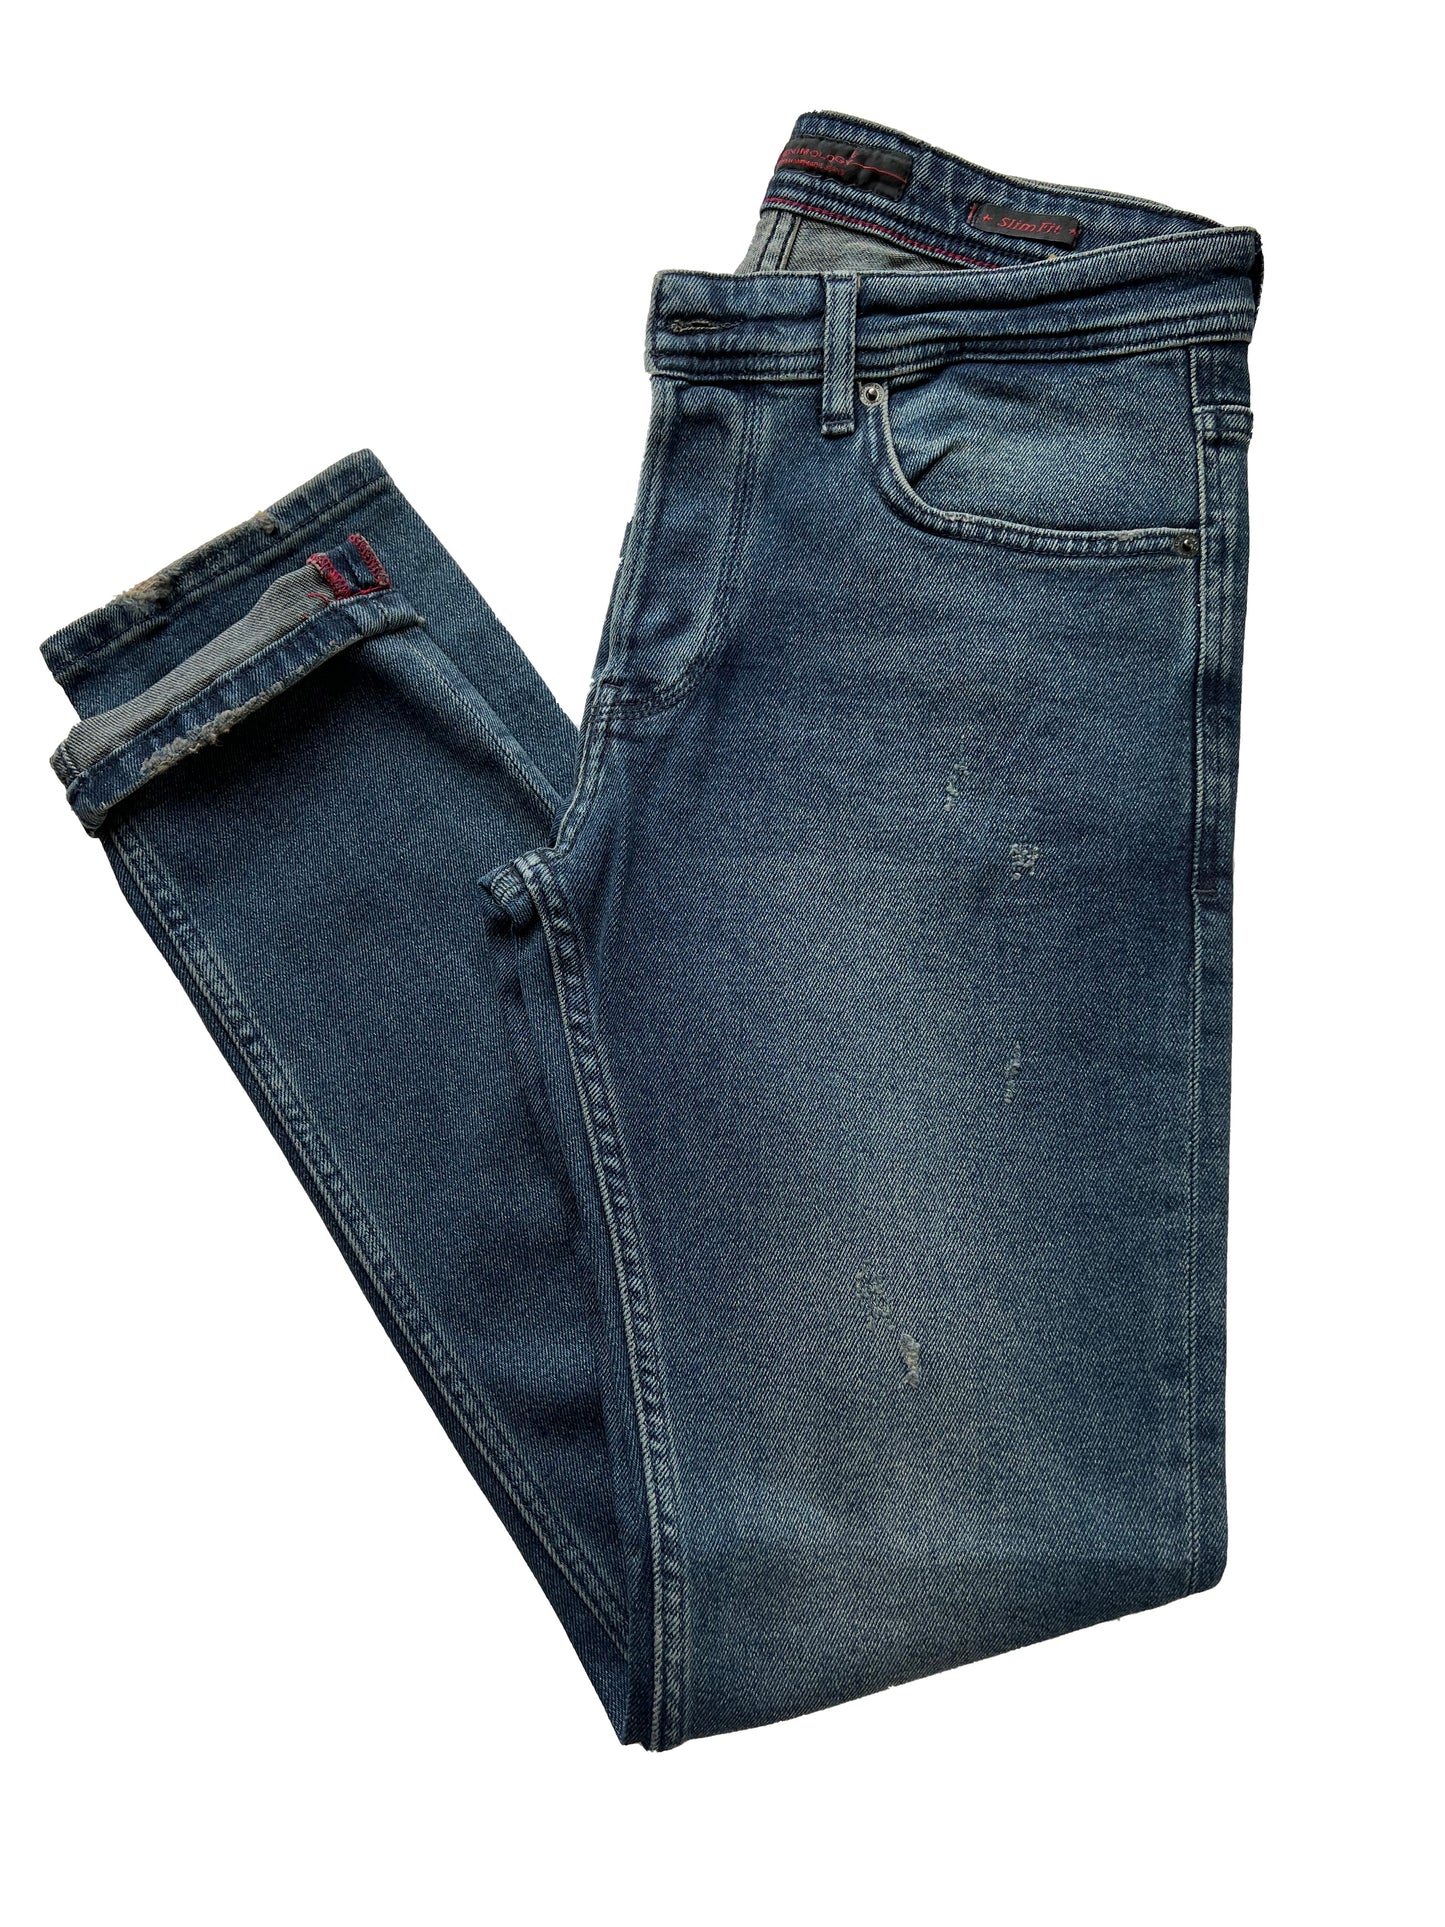 Men's Slim Fit Comfortable Jeans, Trousers- Boston